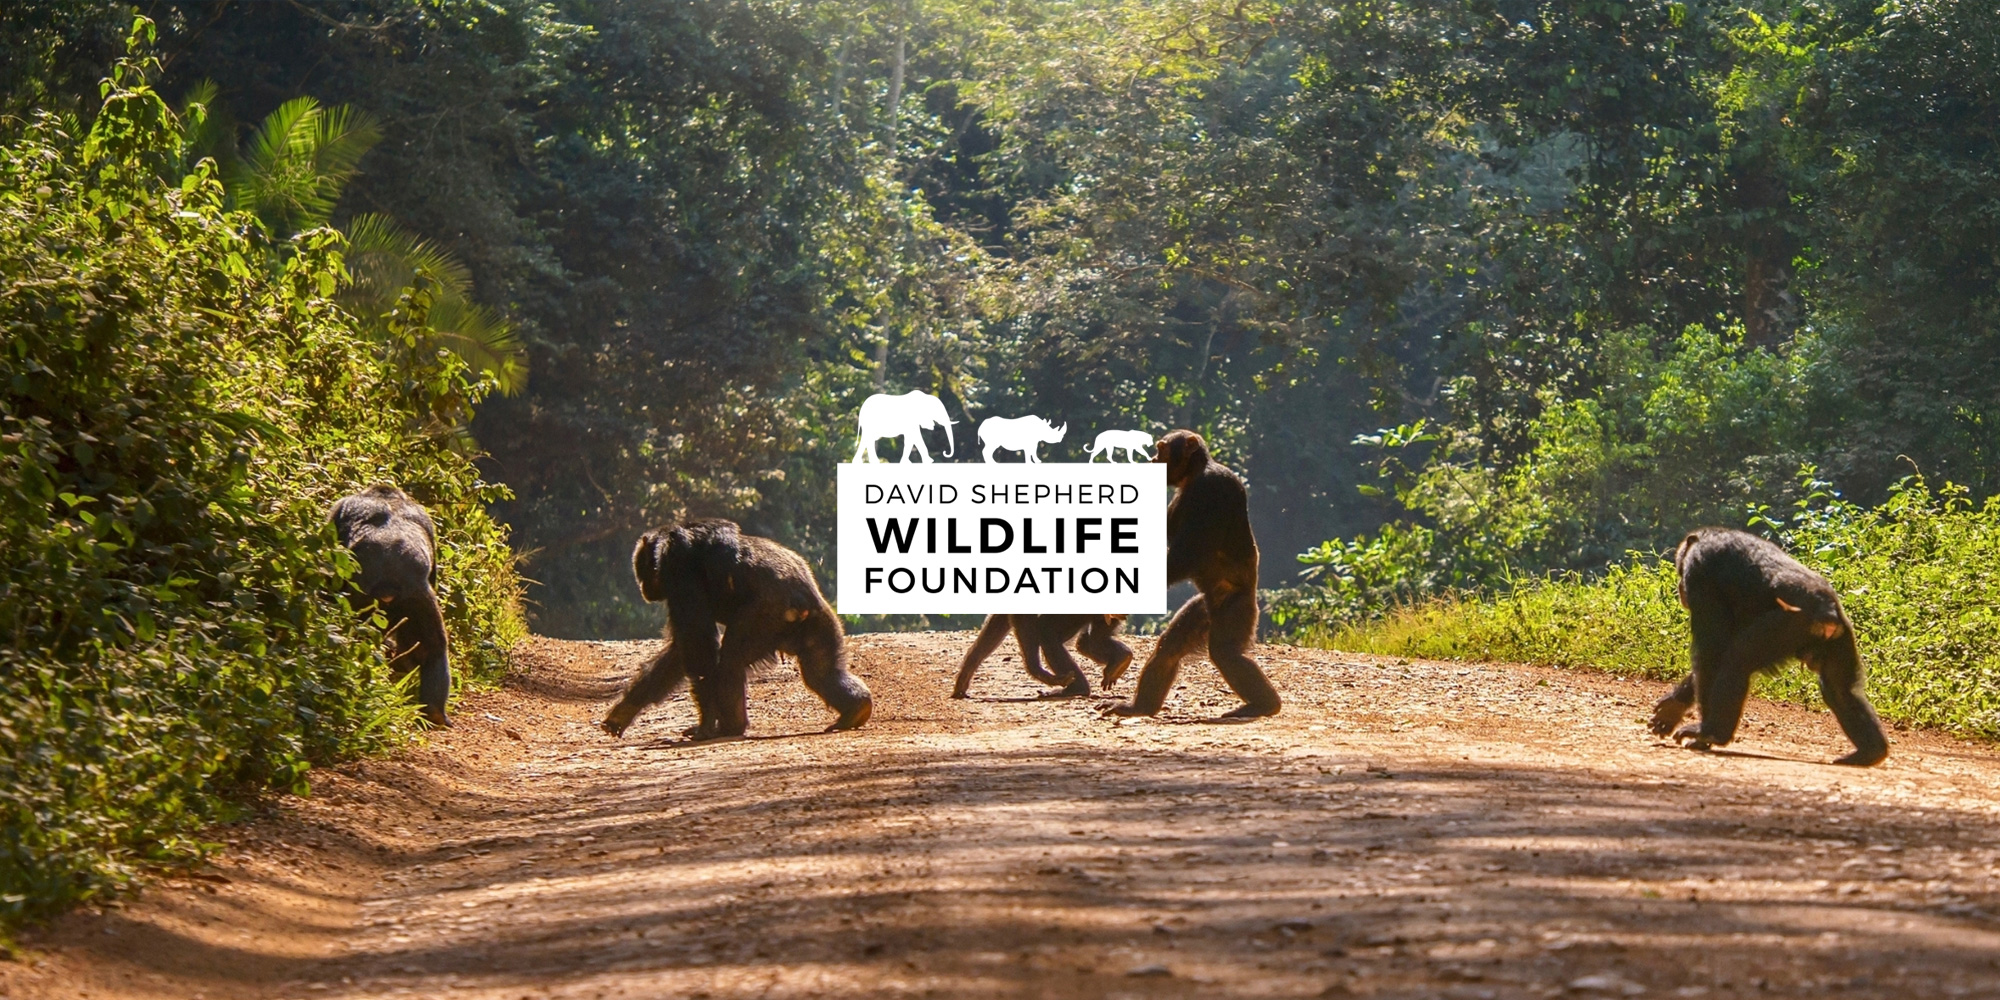 Chimpanzees in Guinea destination of Innovation Visual's charity challenge for David Shepherd Wildlife Foundation